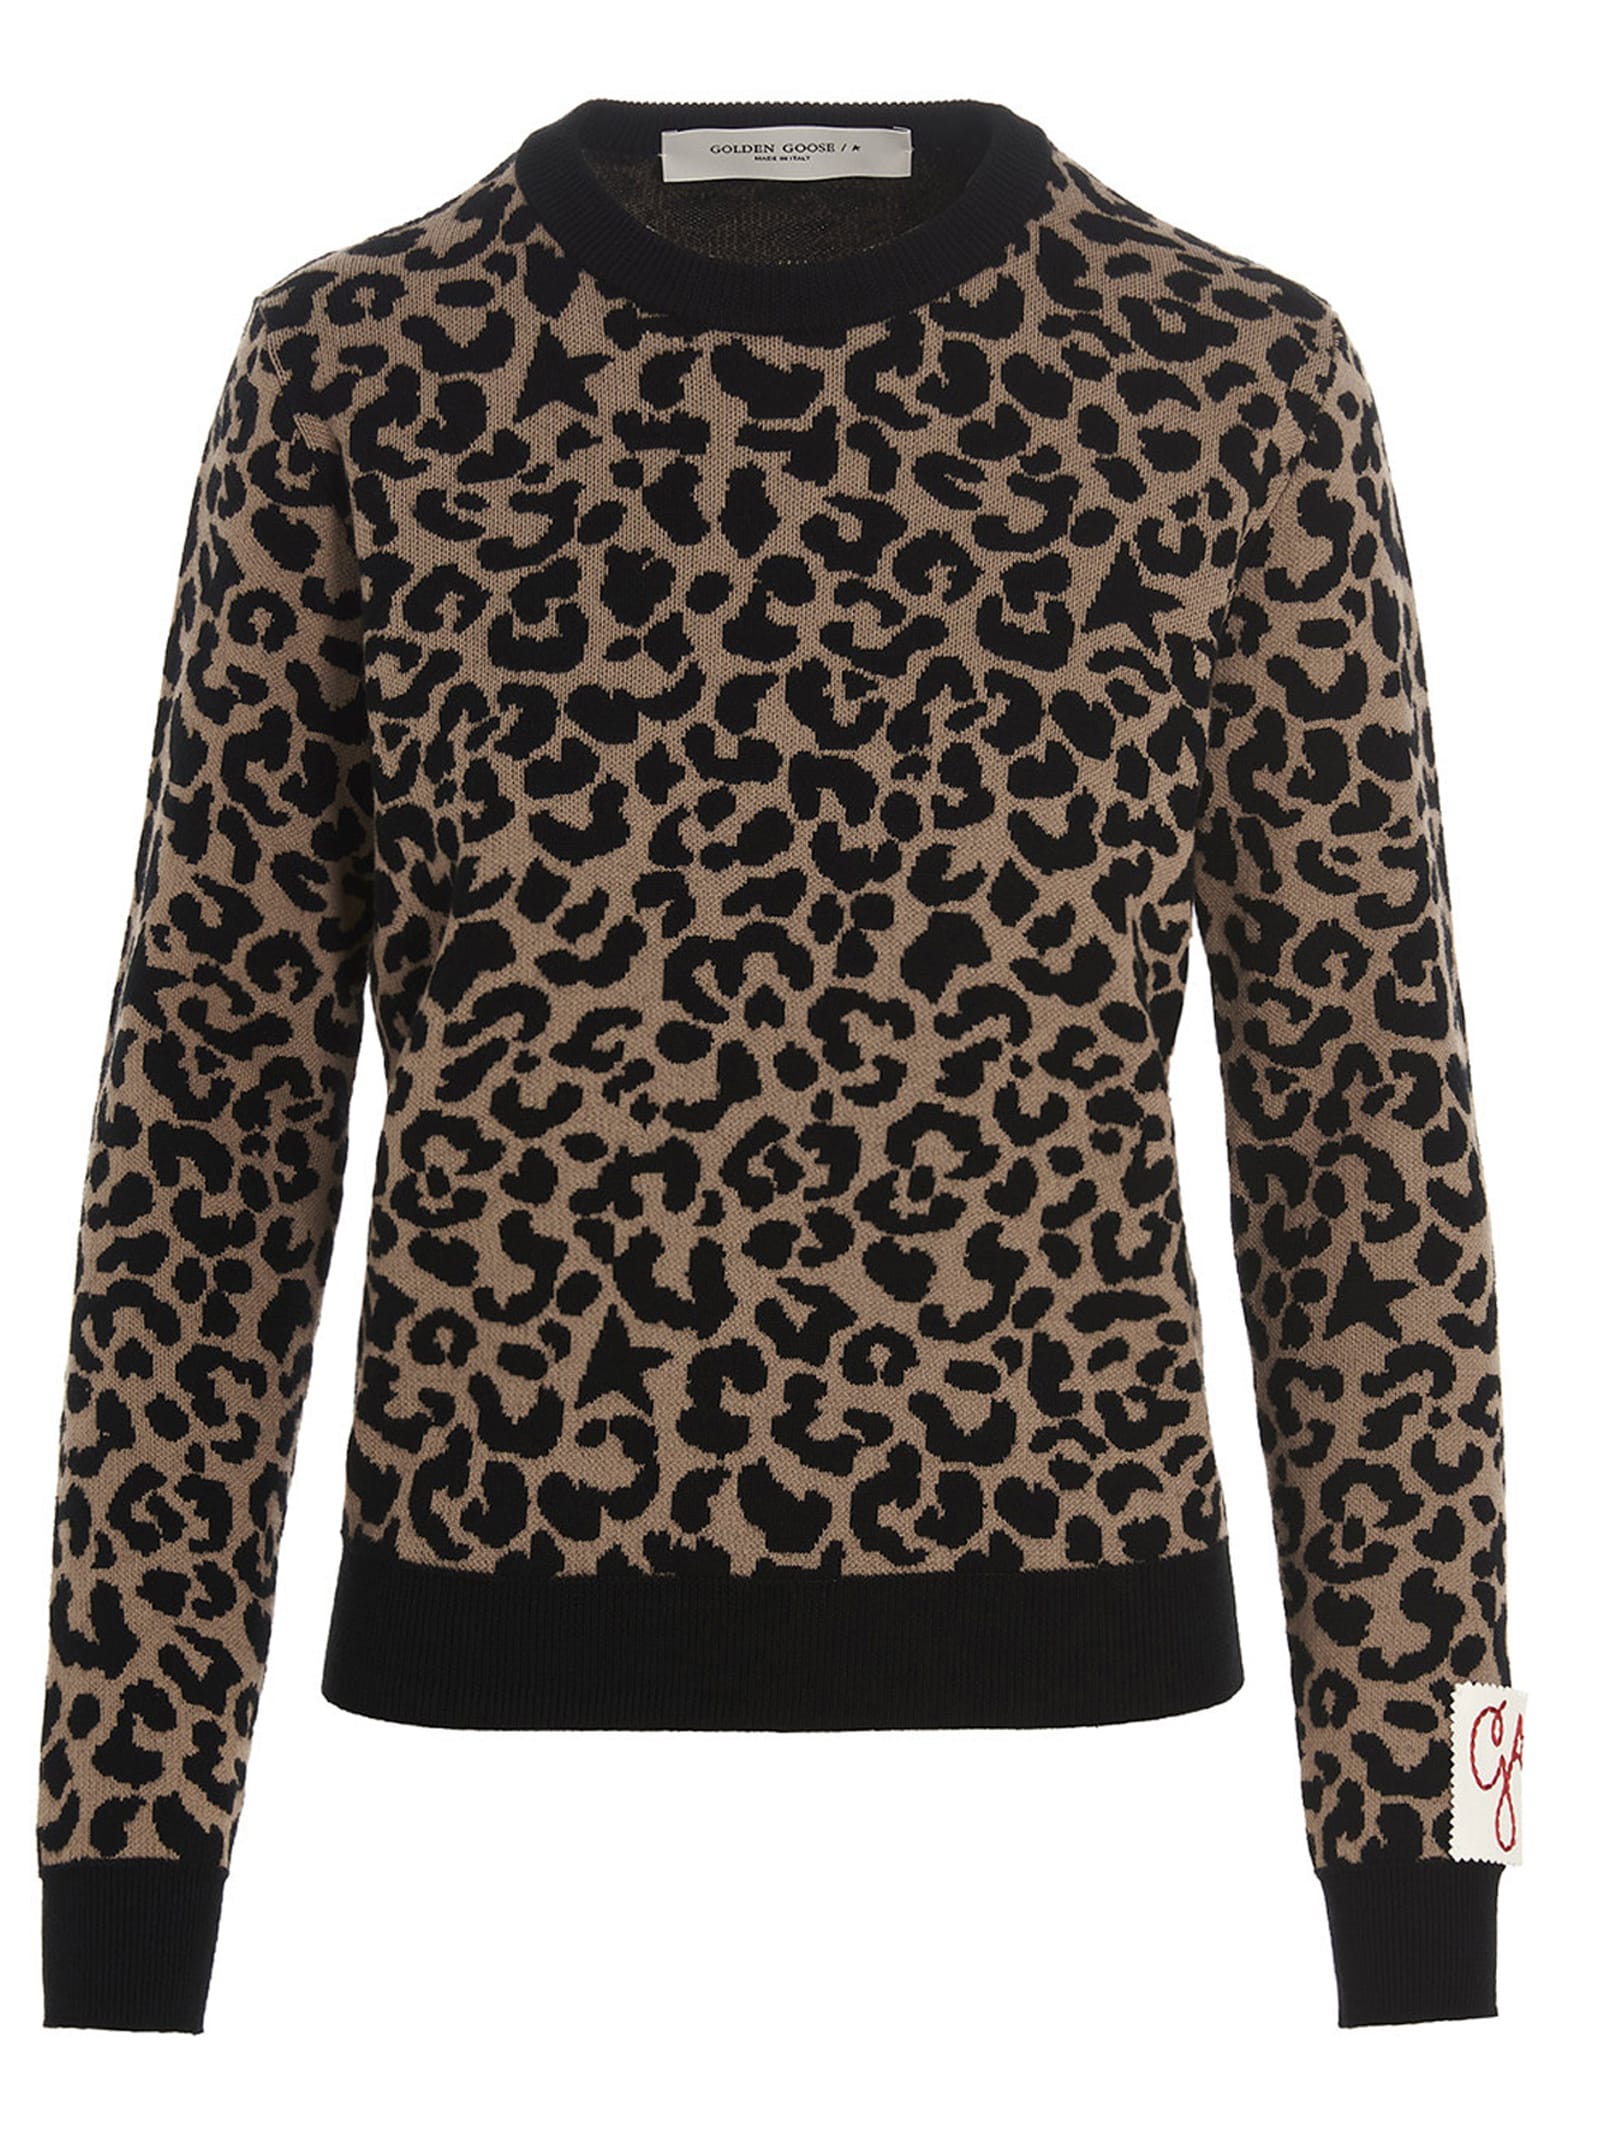 Golden Goose Logo Leopard Sweater